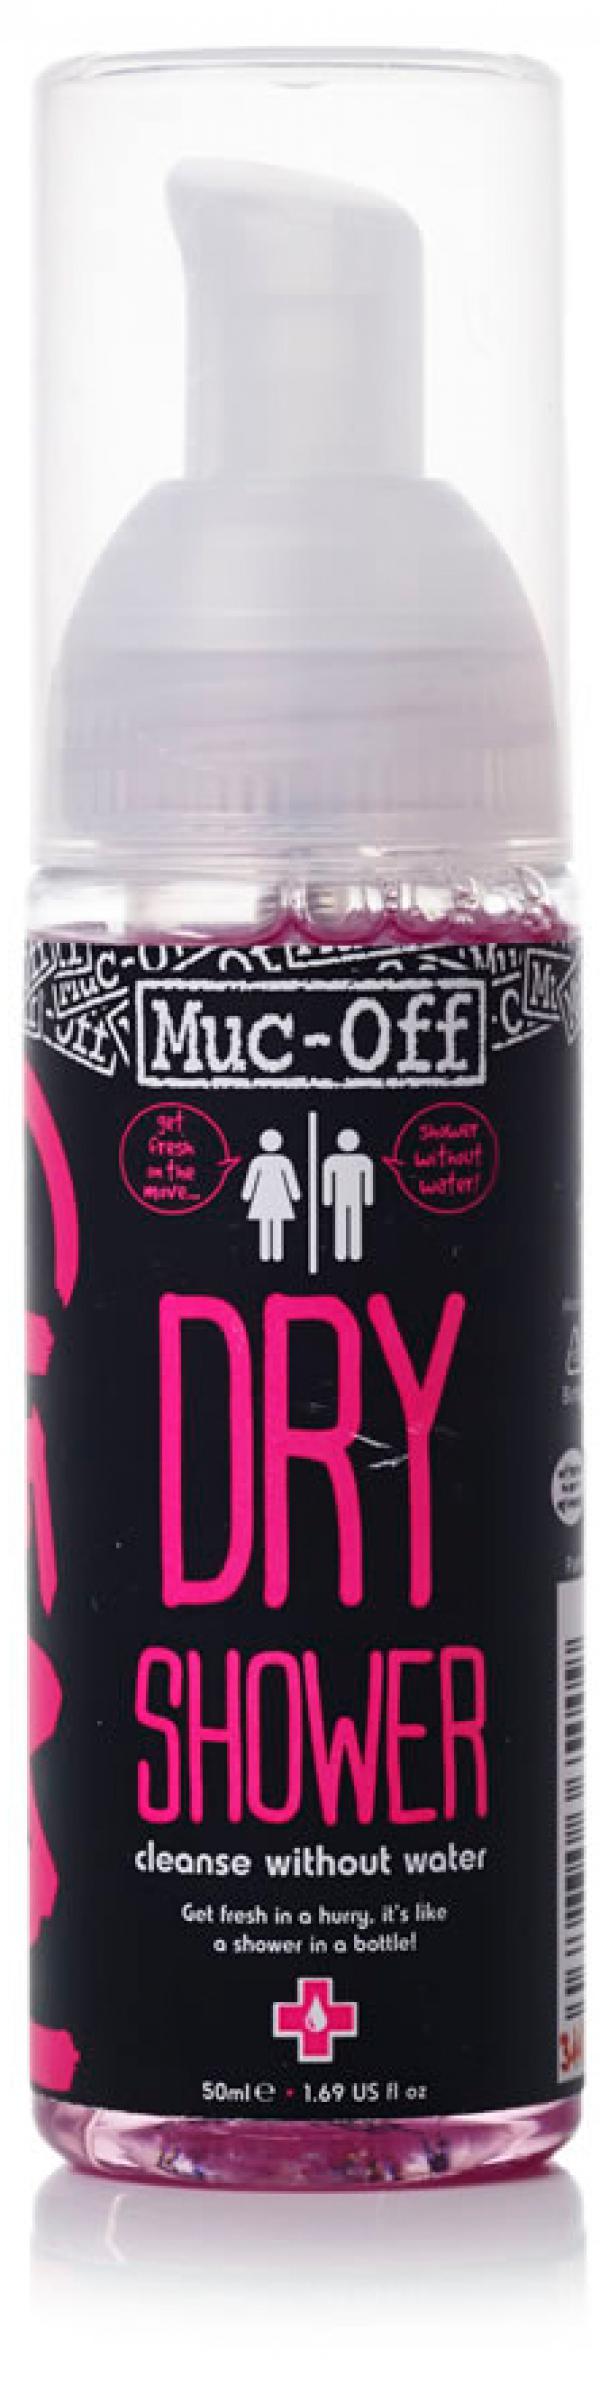  Muc-Off Dry Shower, 50  